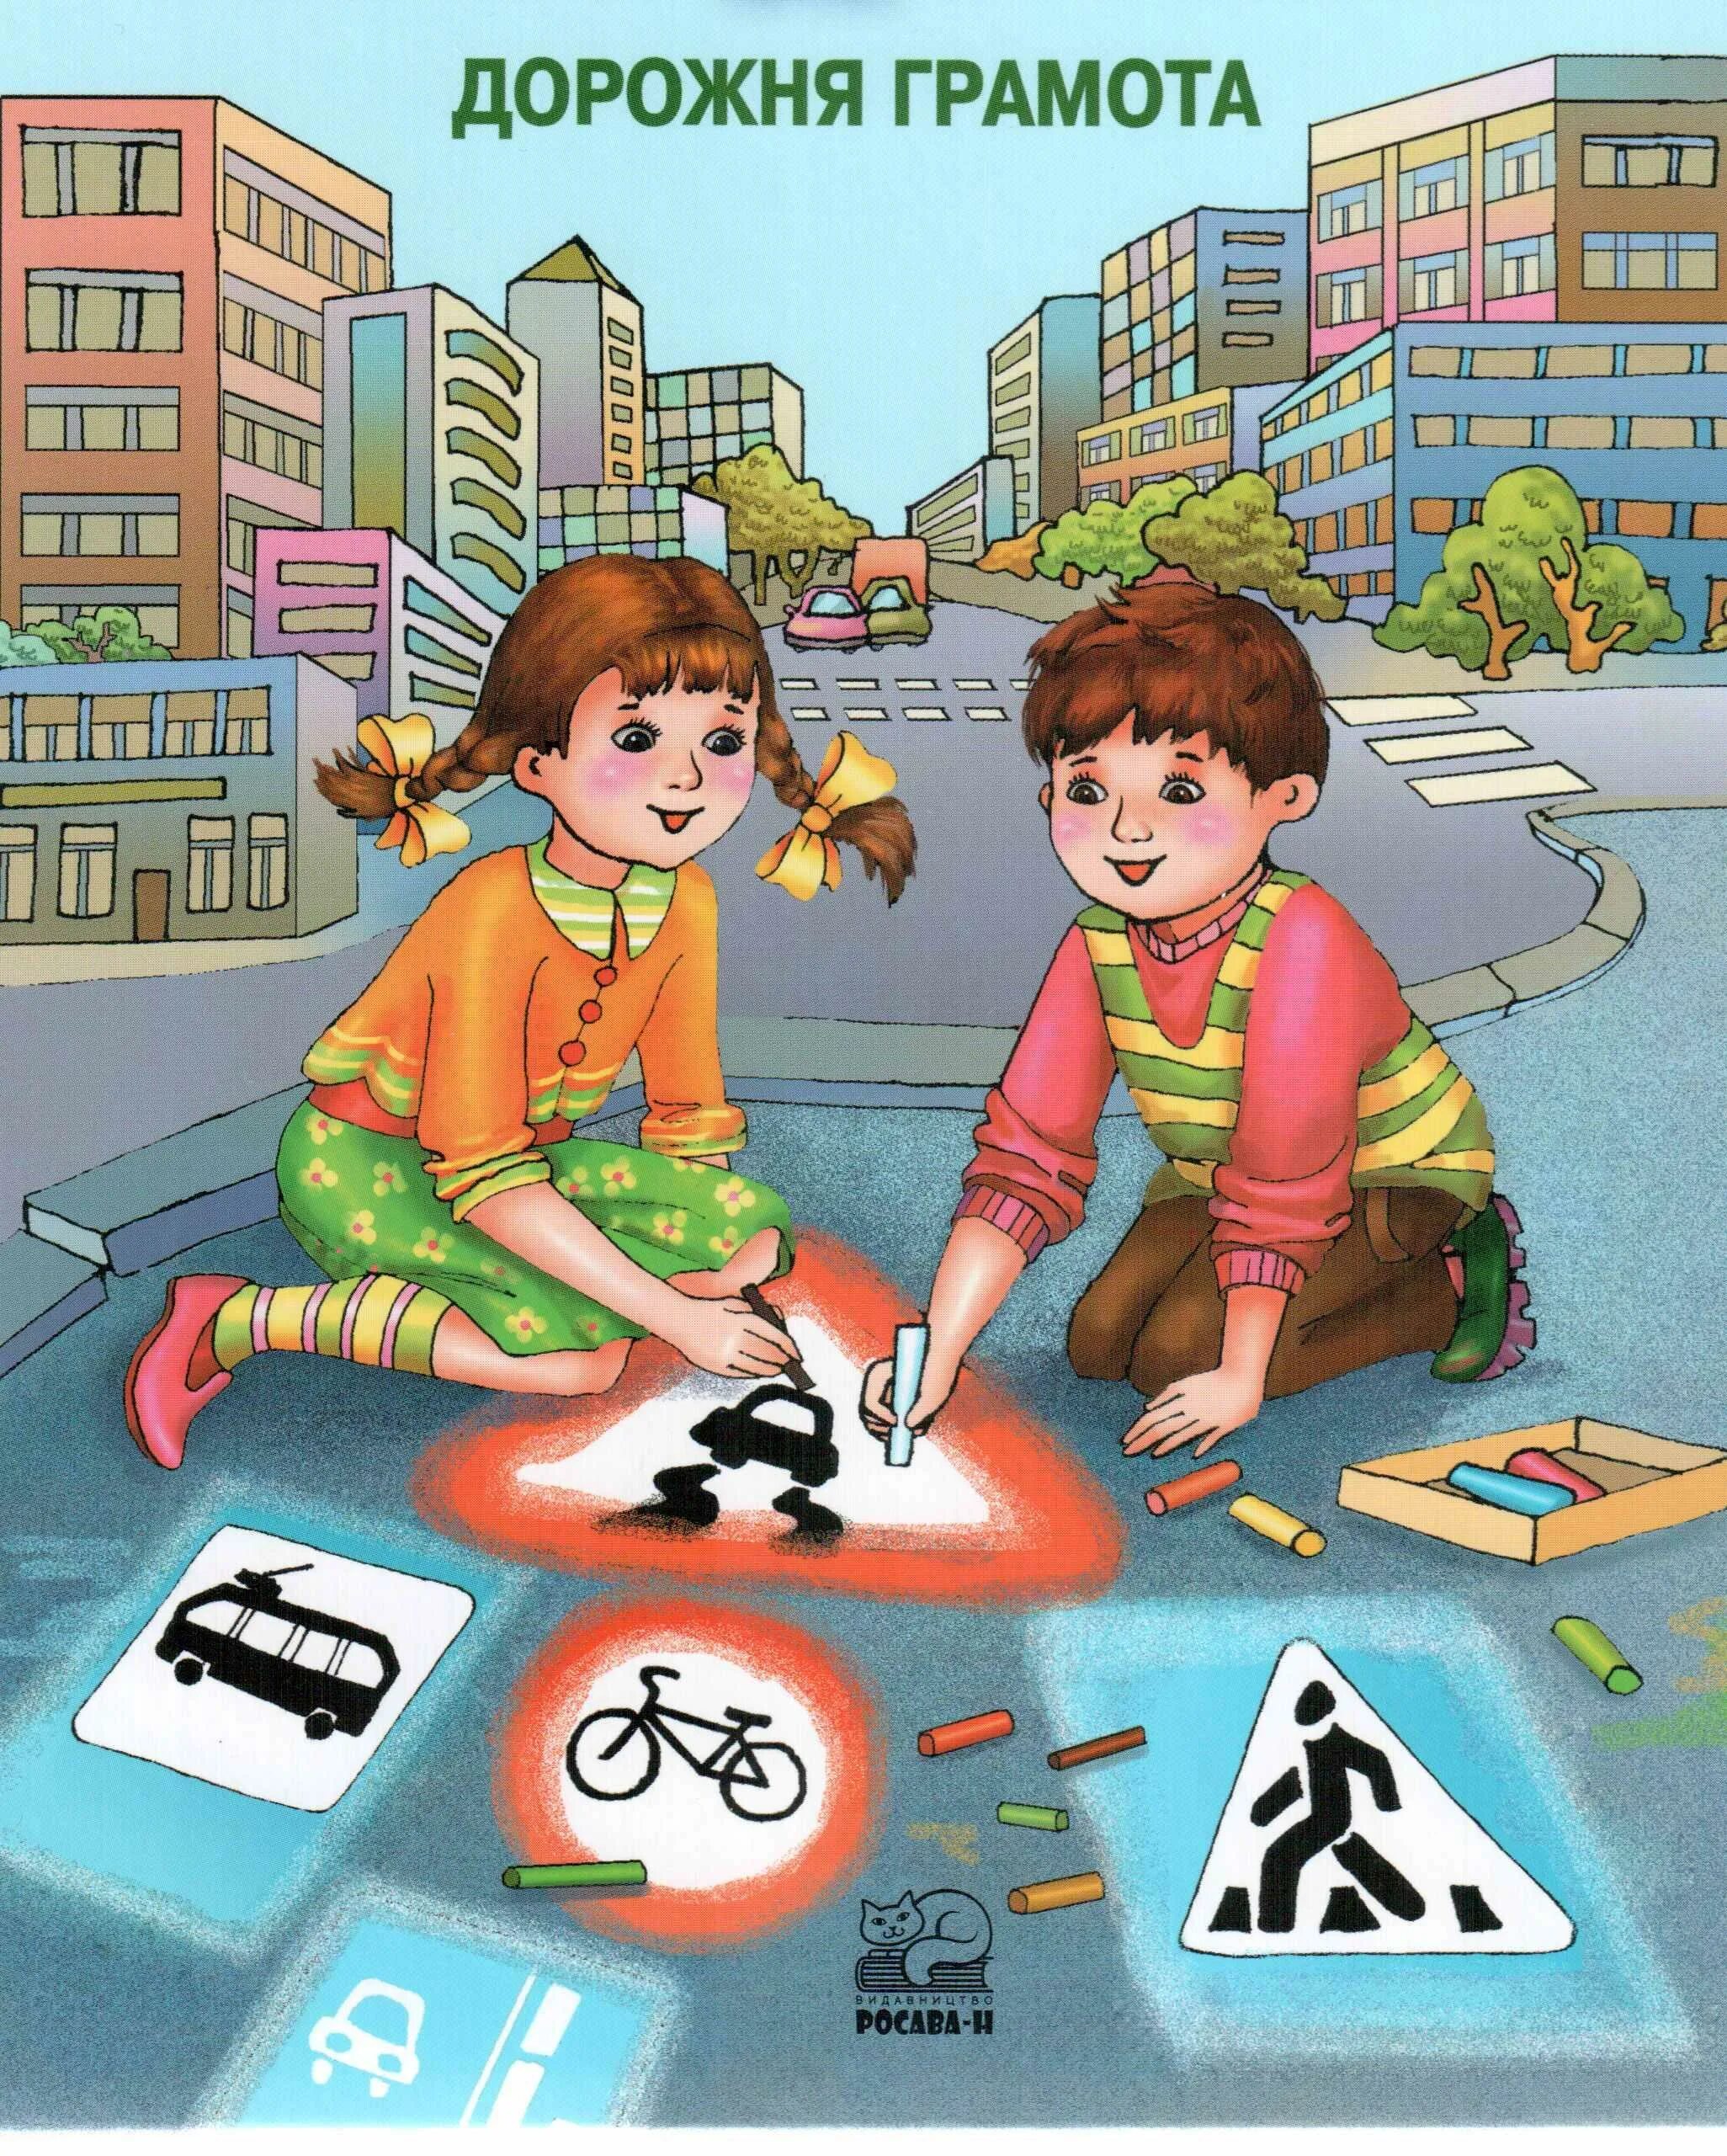 Осторожно дорога. Безопасность на дороге. ПДД для детей. Безопасность детей на дороге картинки.